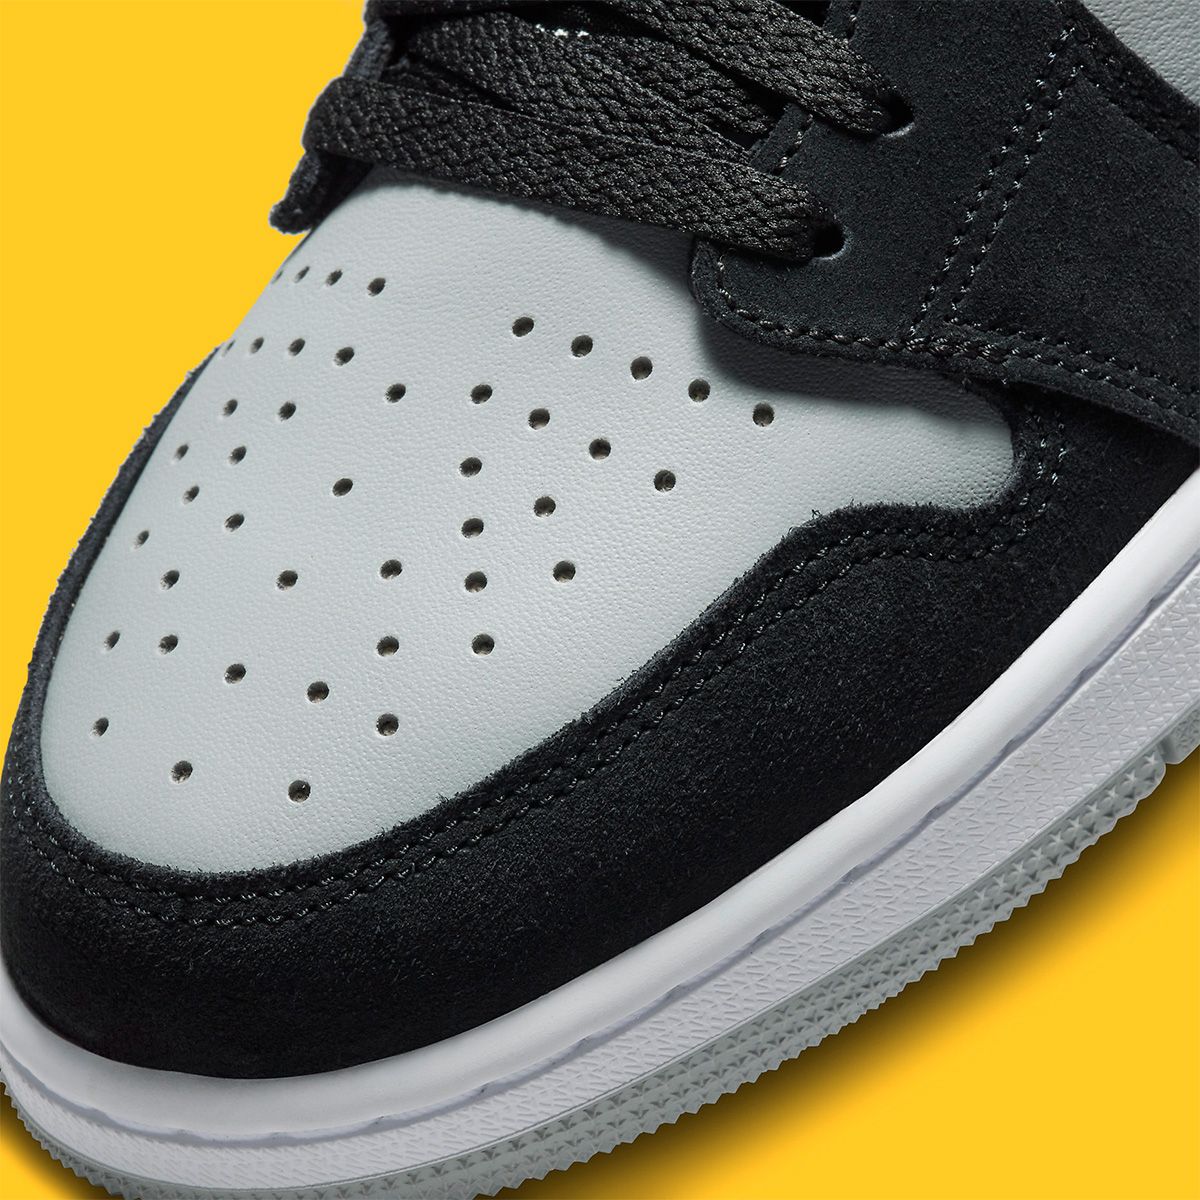 The Air Jordan 1 Zoom Cmft Black Smoke Grey Releases November 8